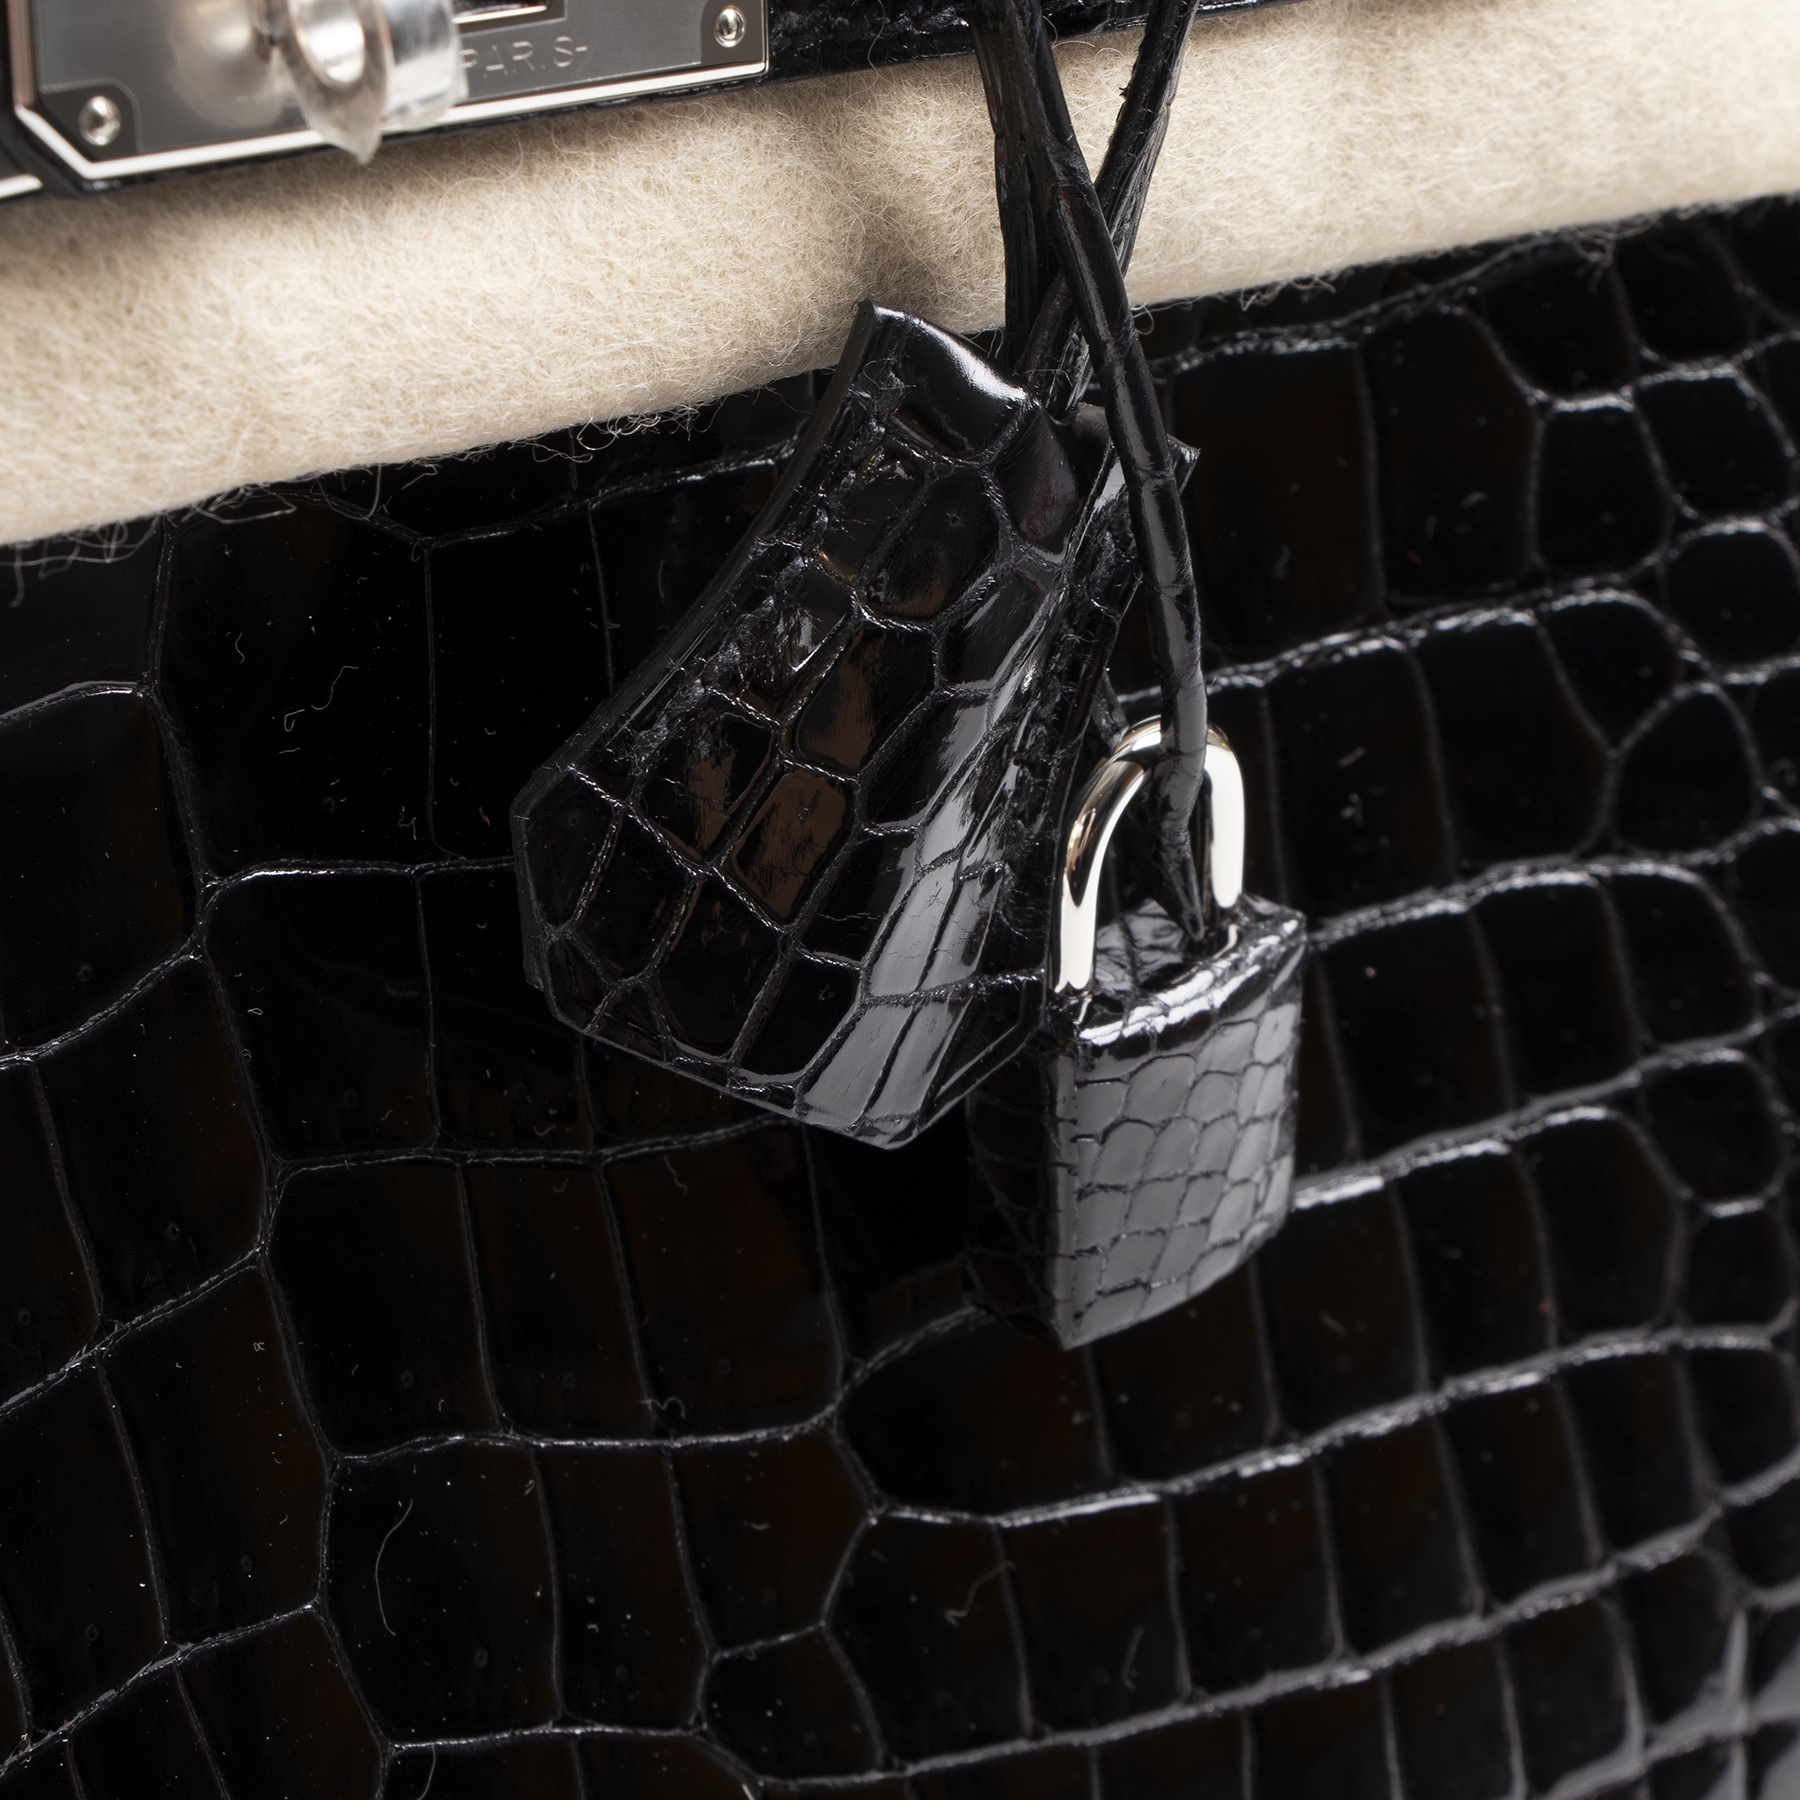 Hermès Paris Made in France. Sac Birkin 30 cm en crocodile